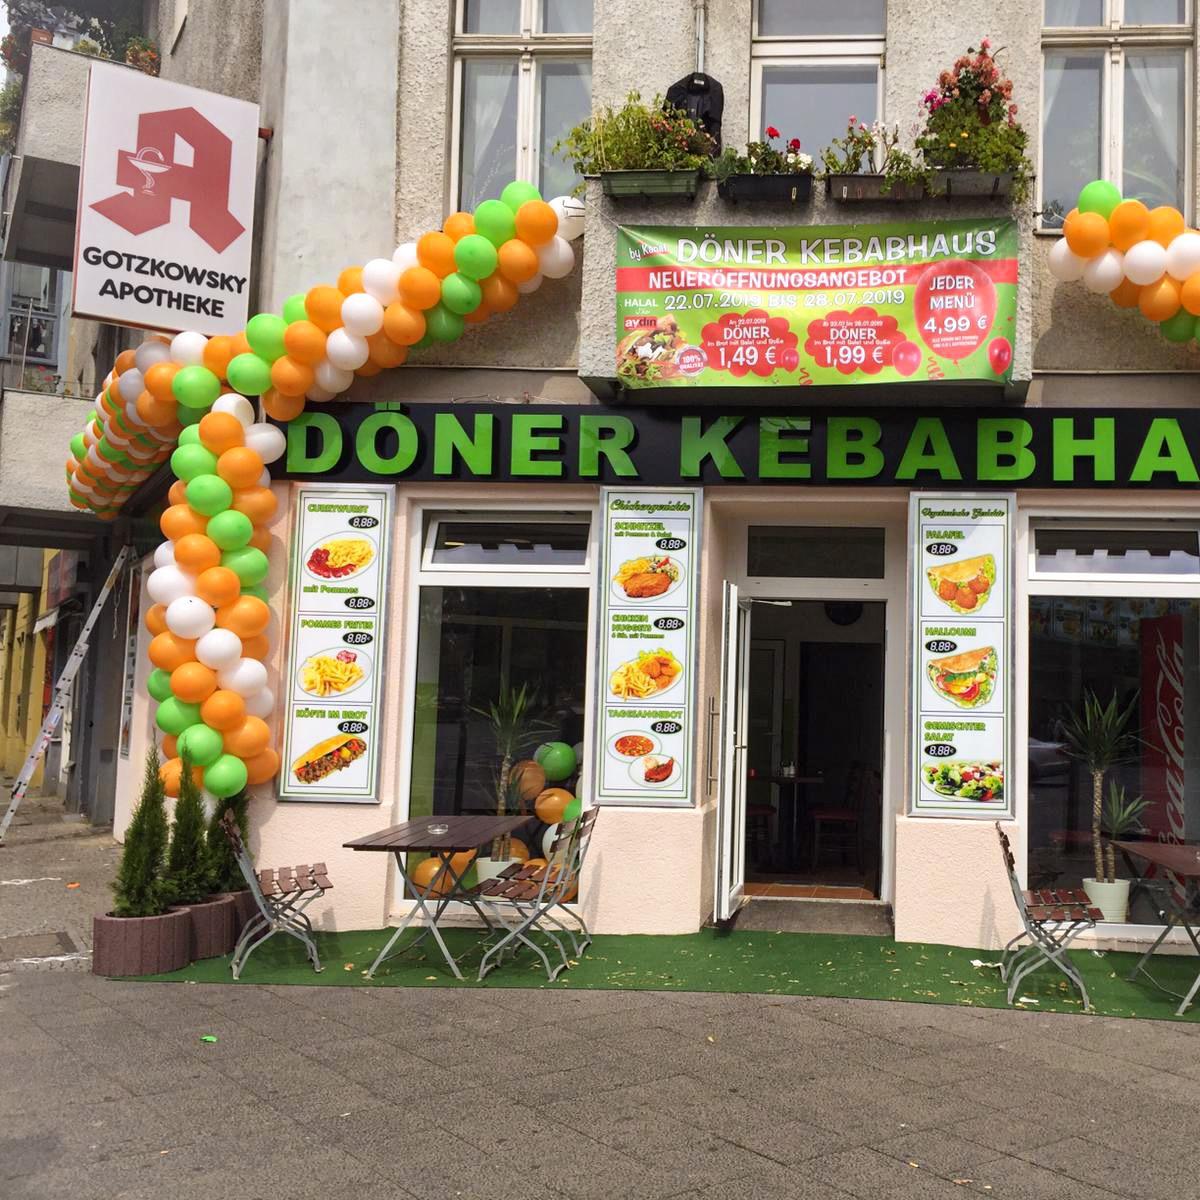 Restaurant "Döner Kebabhaus" in Berlin